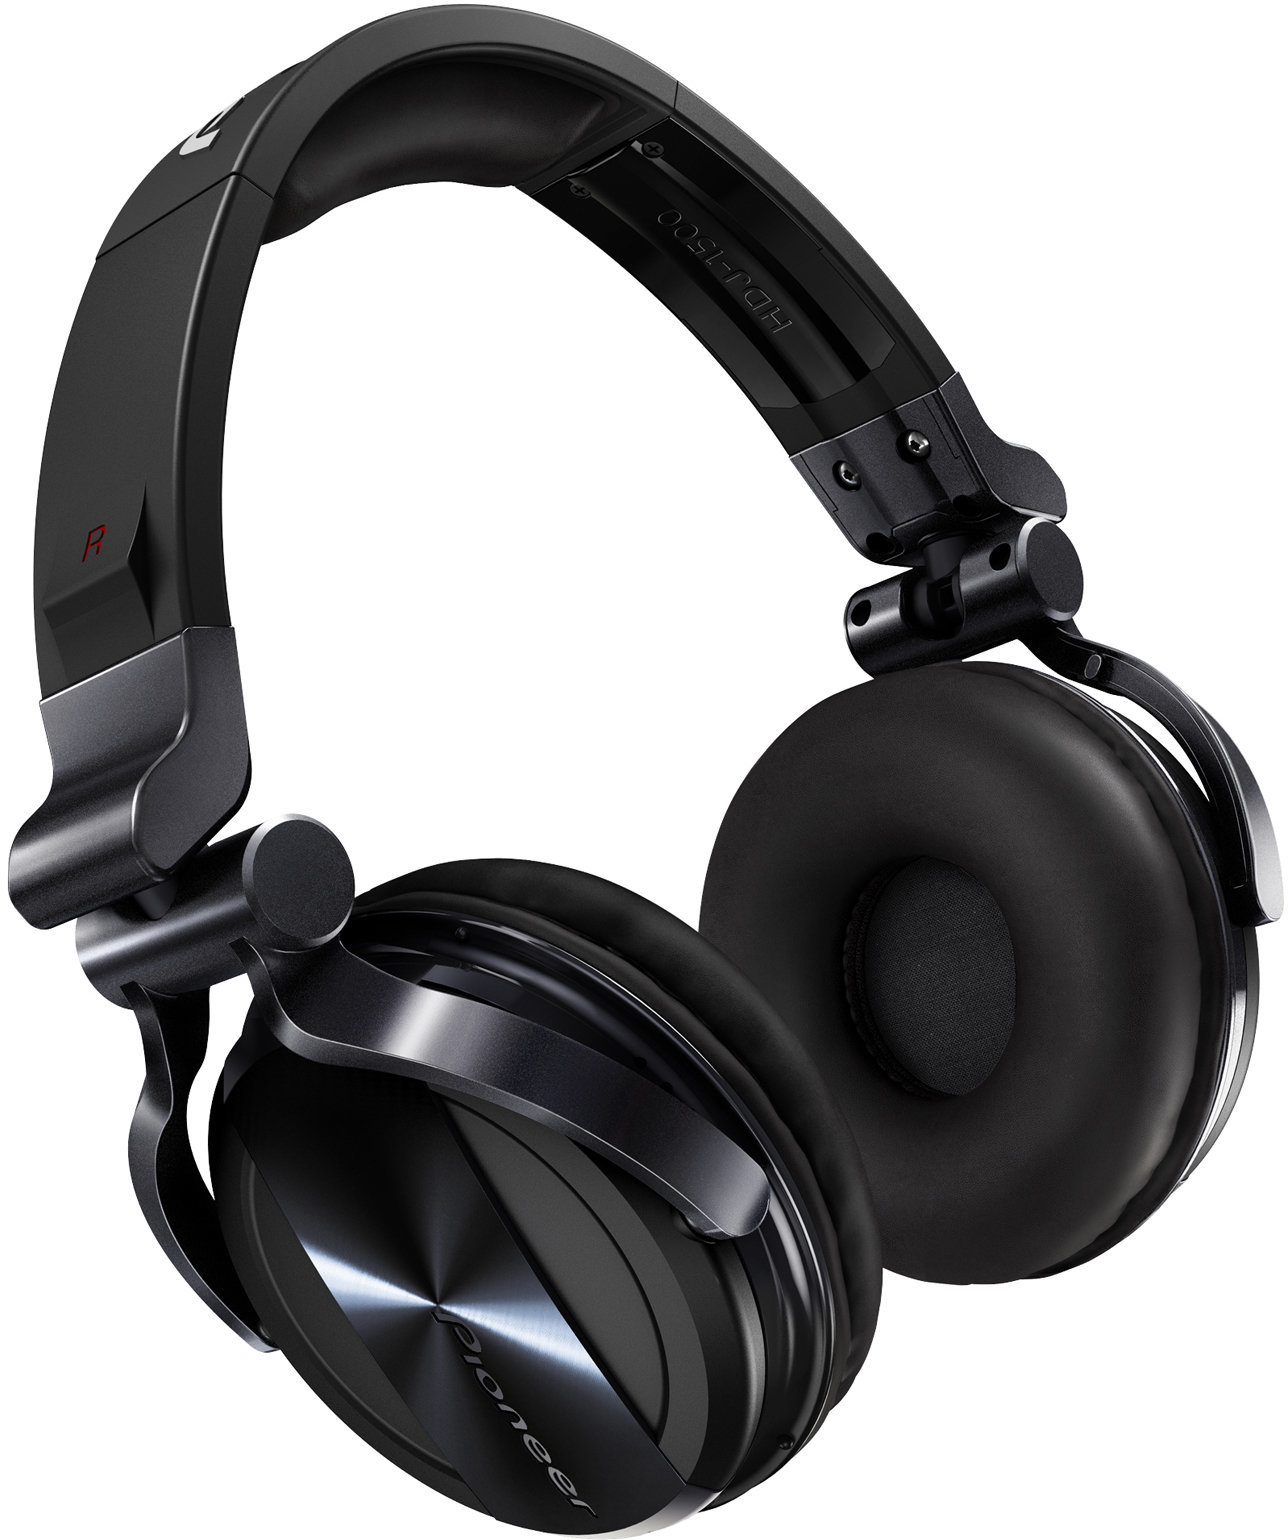 DJ Headphone Pioneer Dj HDJ-1500 Black